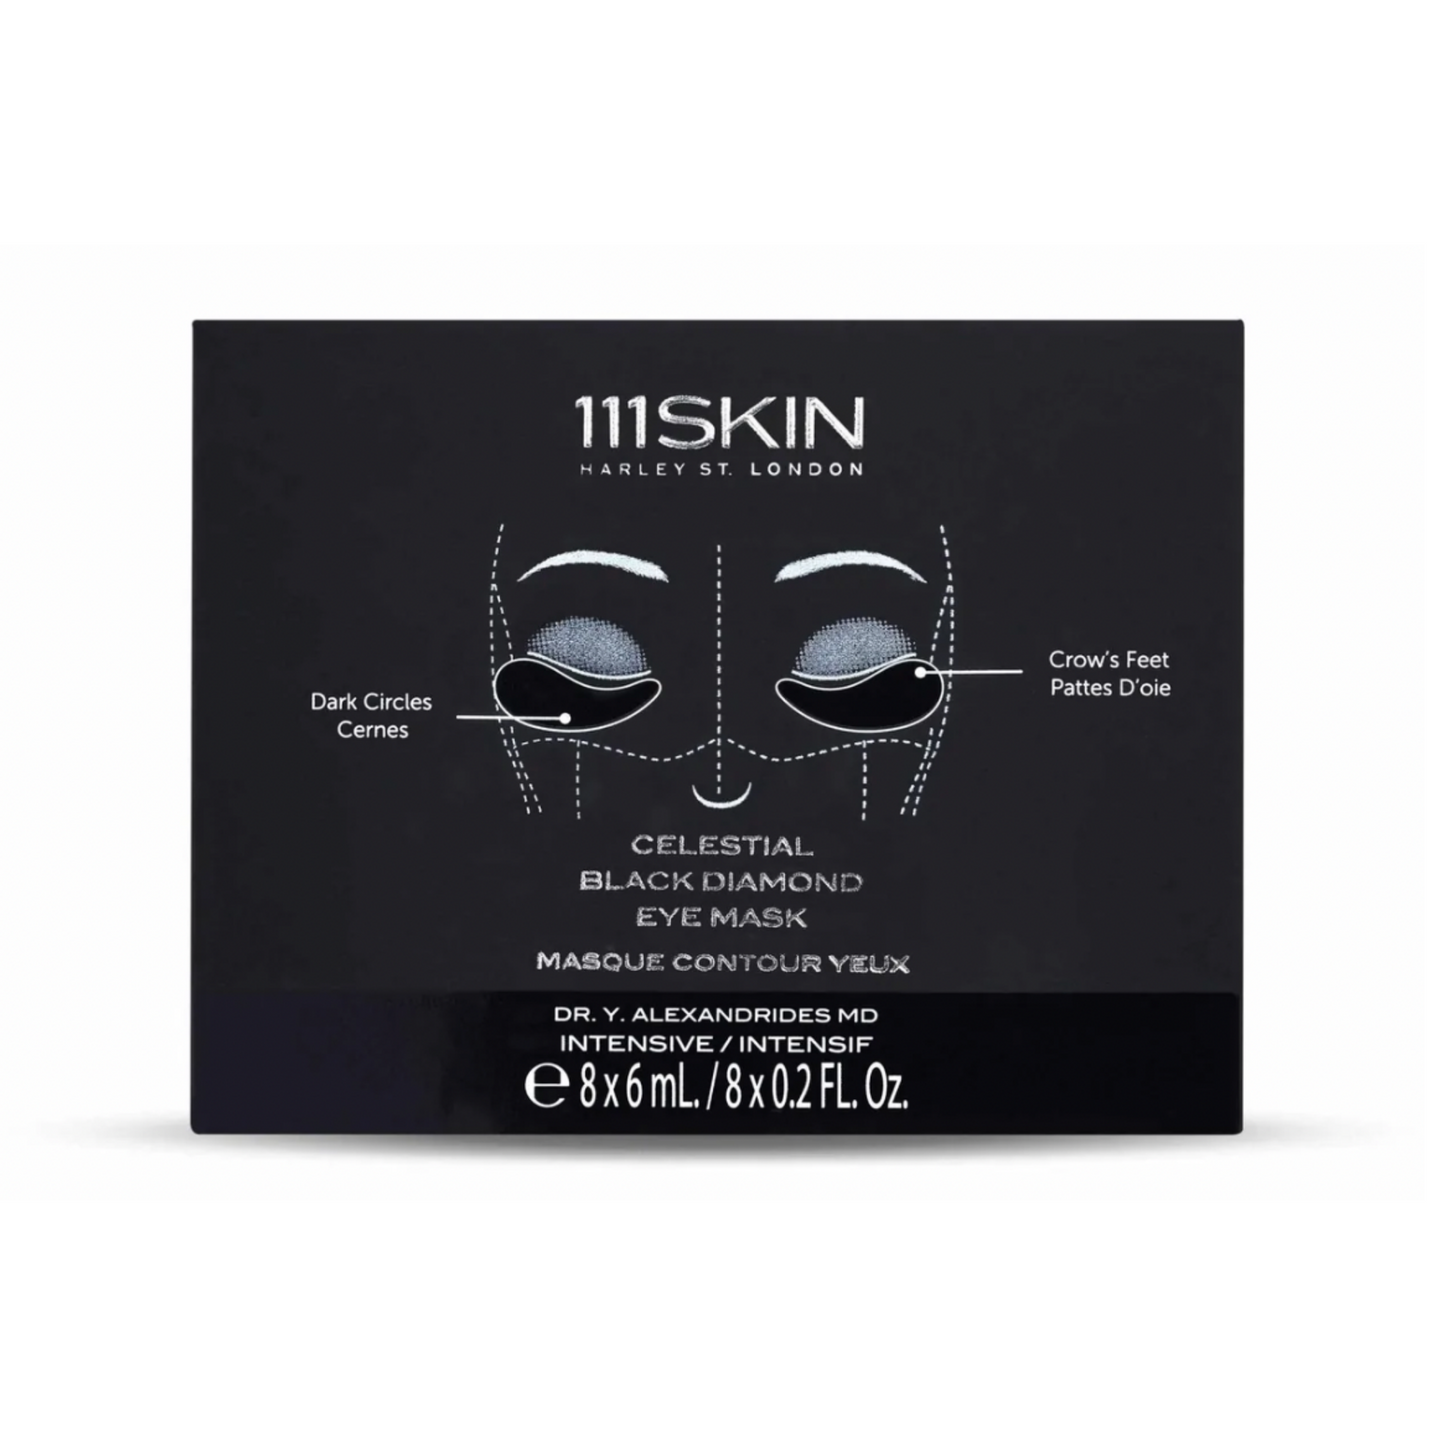 Celestial Black Diamond Eye Mask: Firming & Tightening Under-Eye Mask